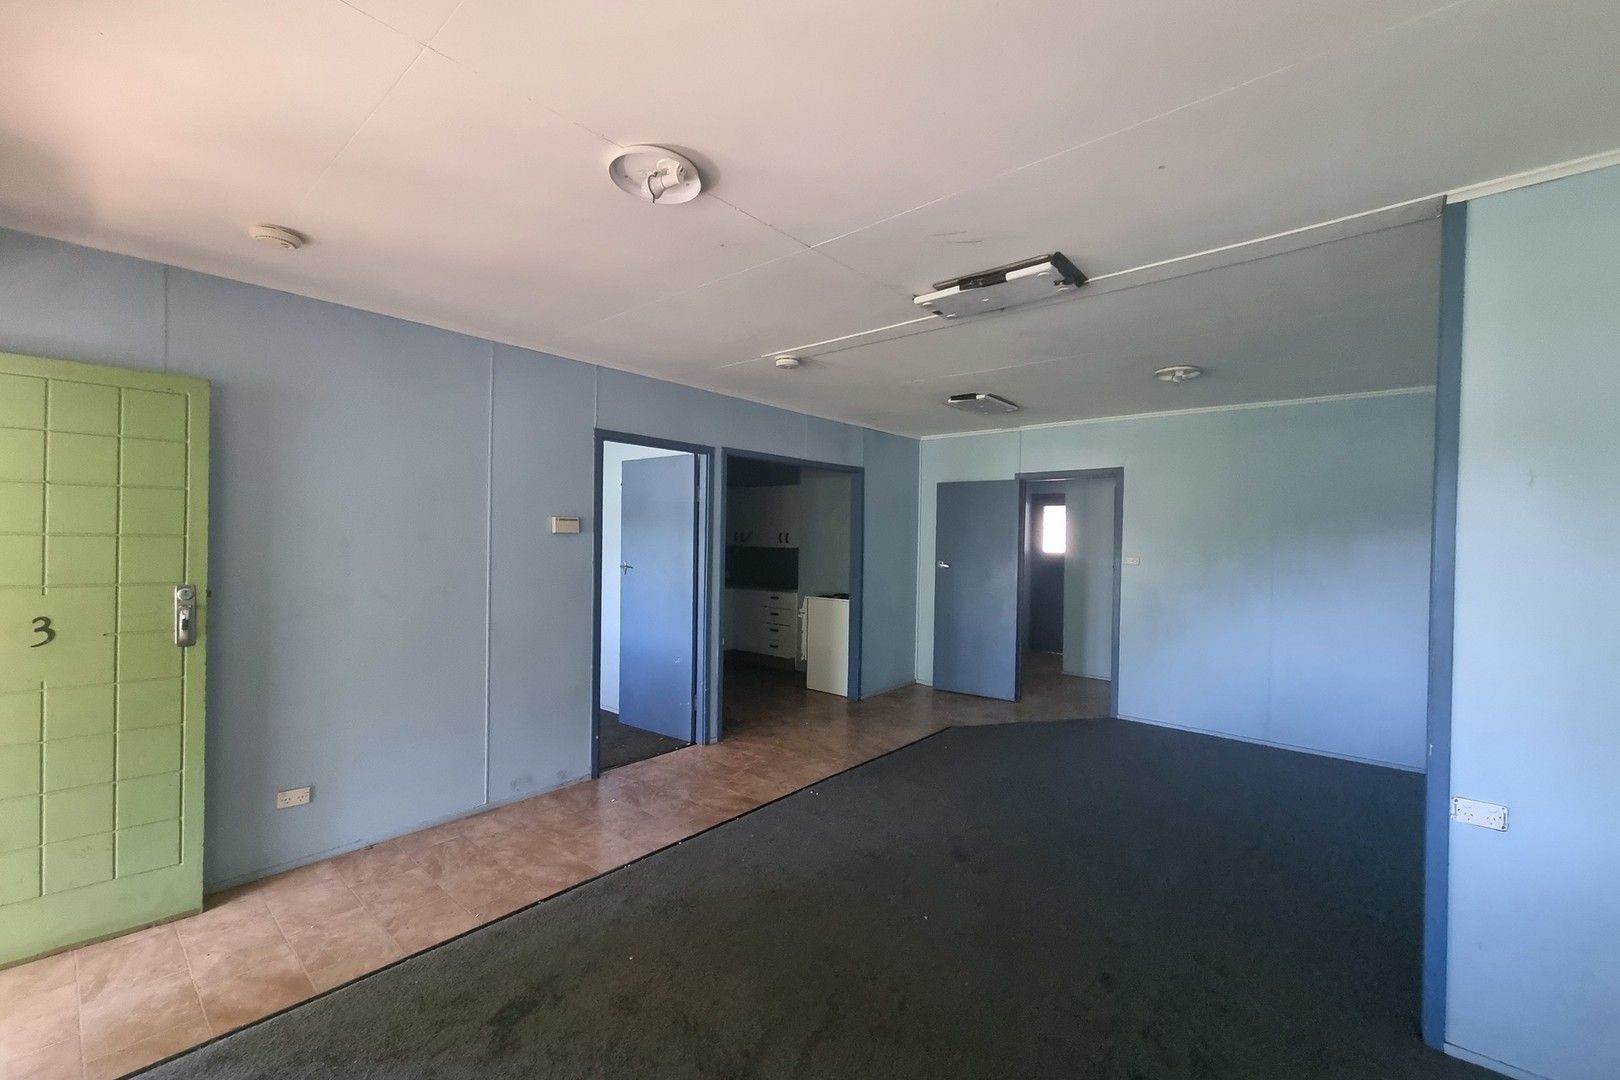 2 bedrooms Apartment / Unit / Flat in 3/139 Trainor Street MOUNT ISA QLD, 4825